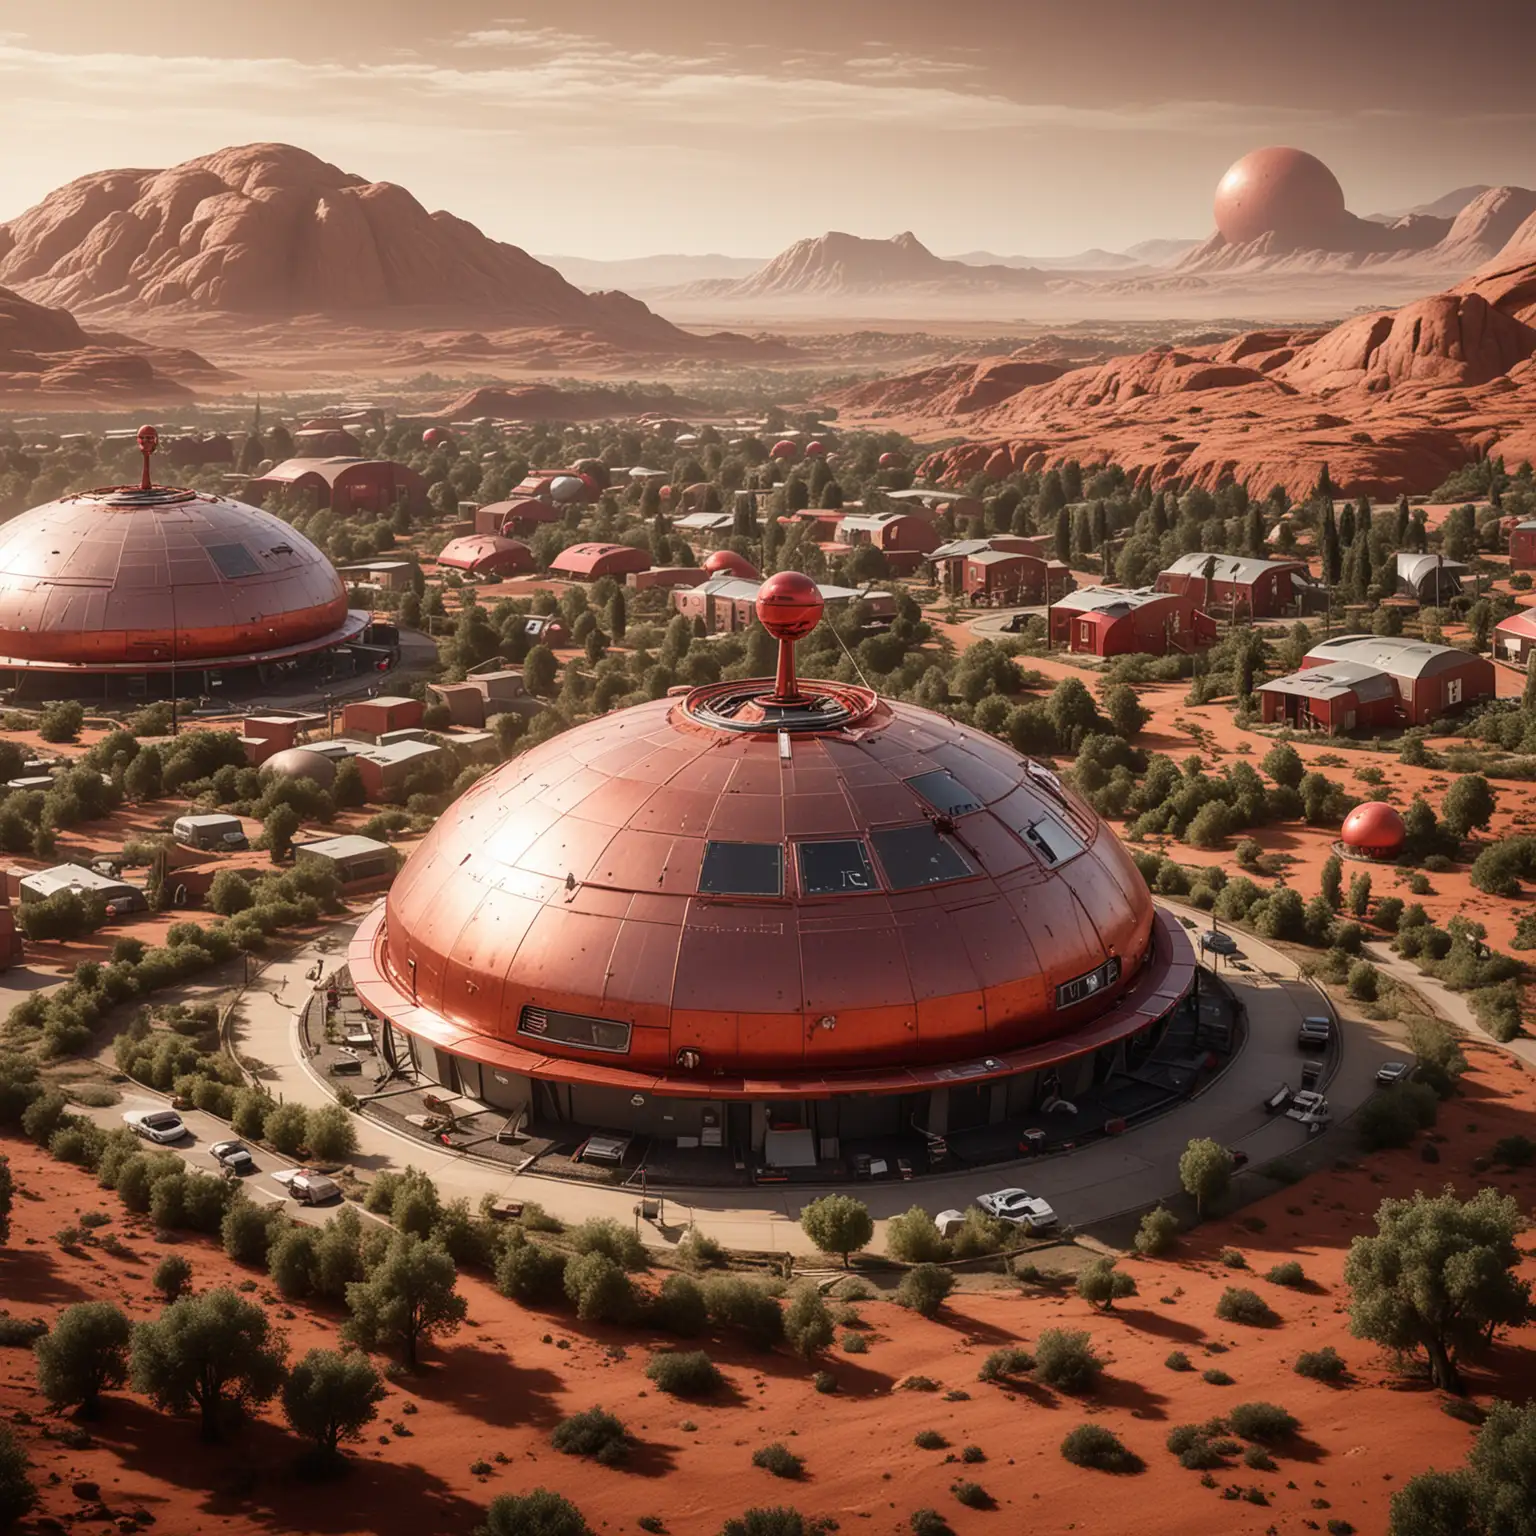 HighTech Martian Surrender Station Amid Suburban Landscape